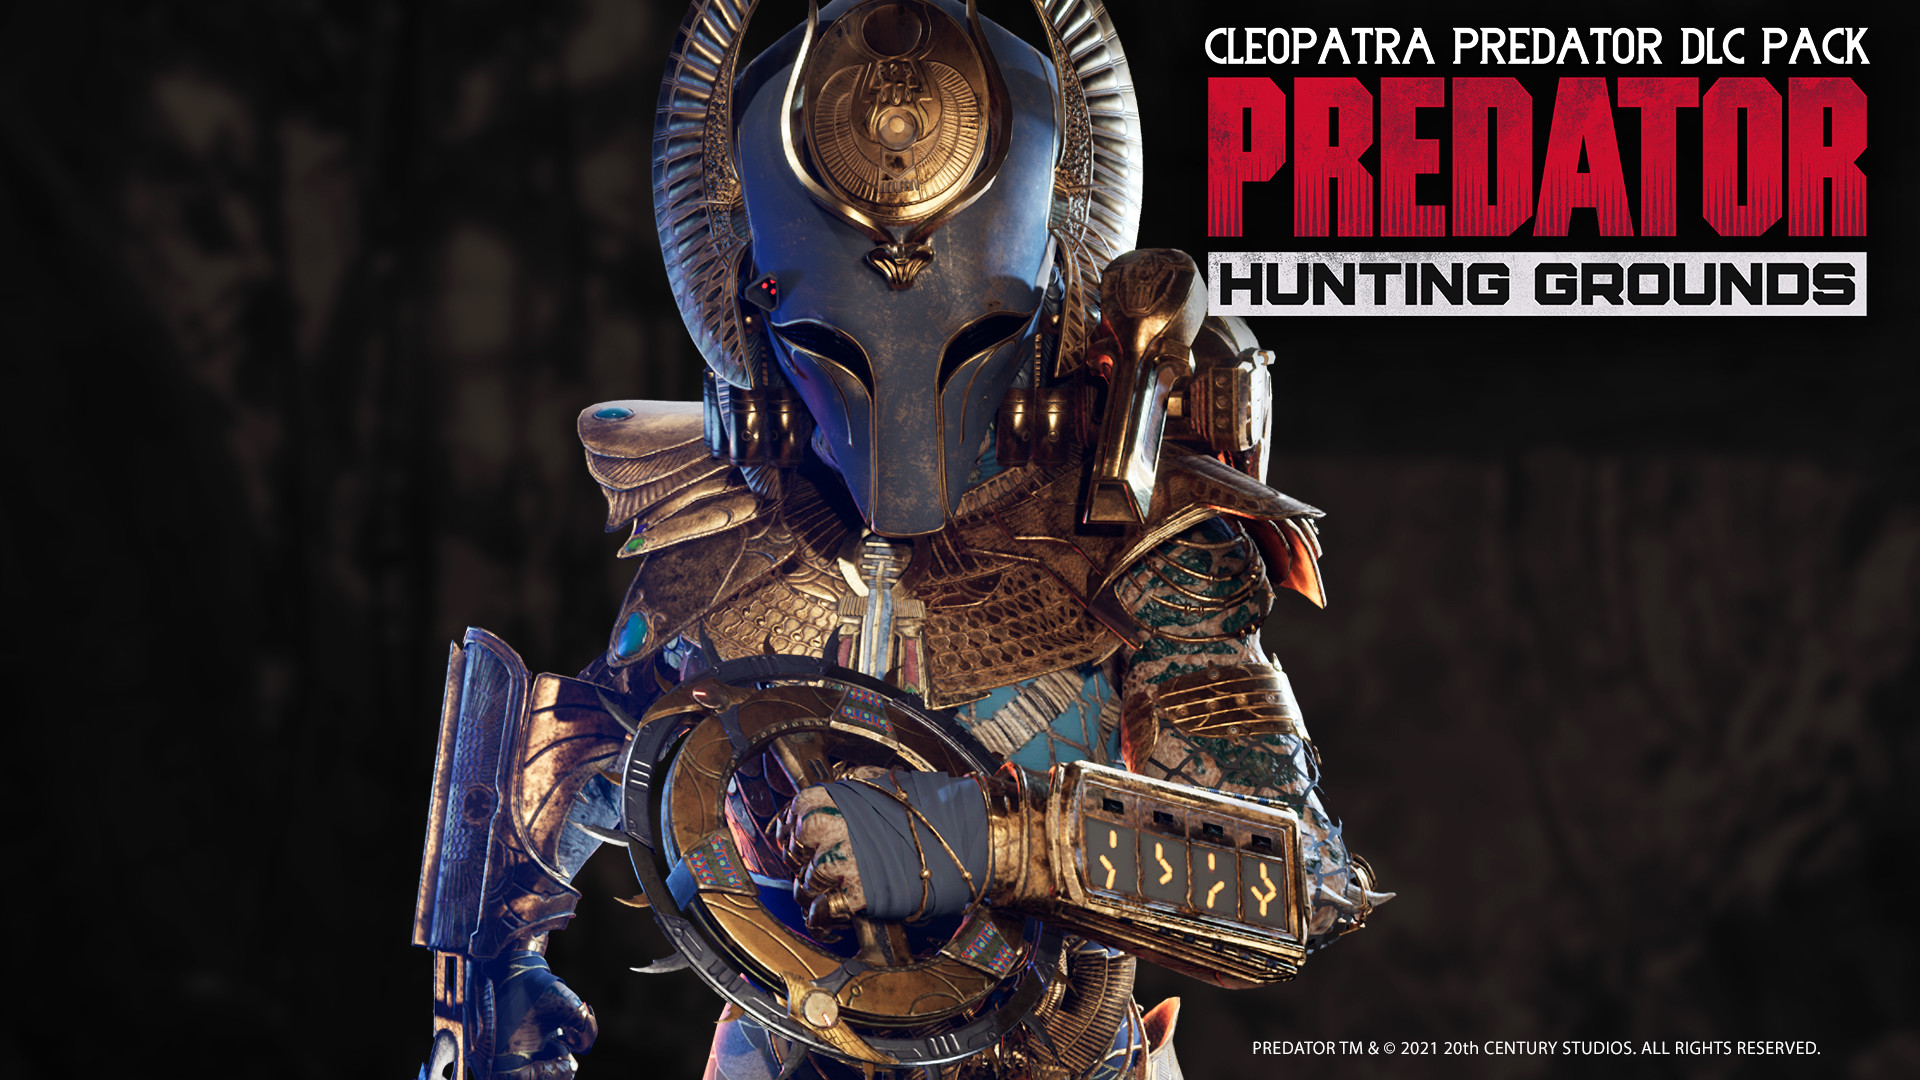 Predator: Hunting Grounds - Cleopatra DLC Pack Featured Screenshot #1